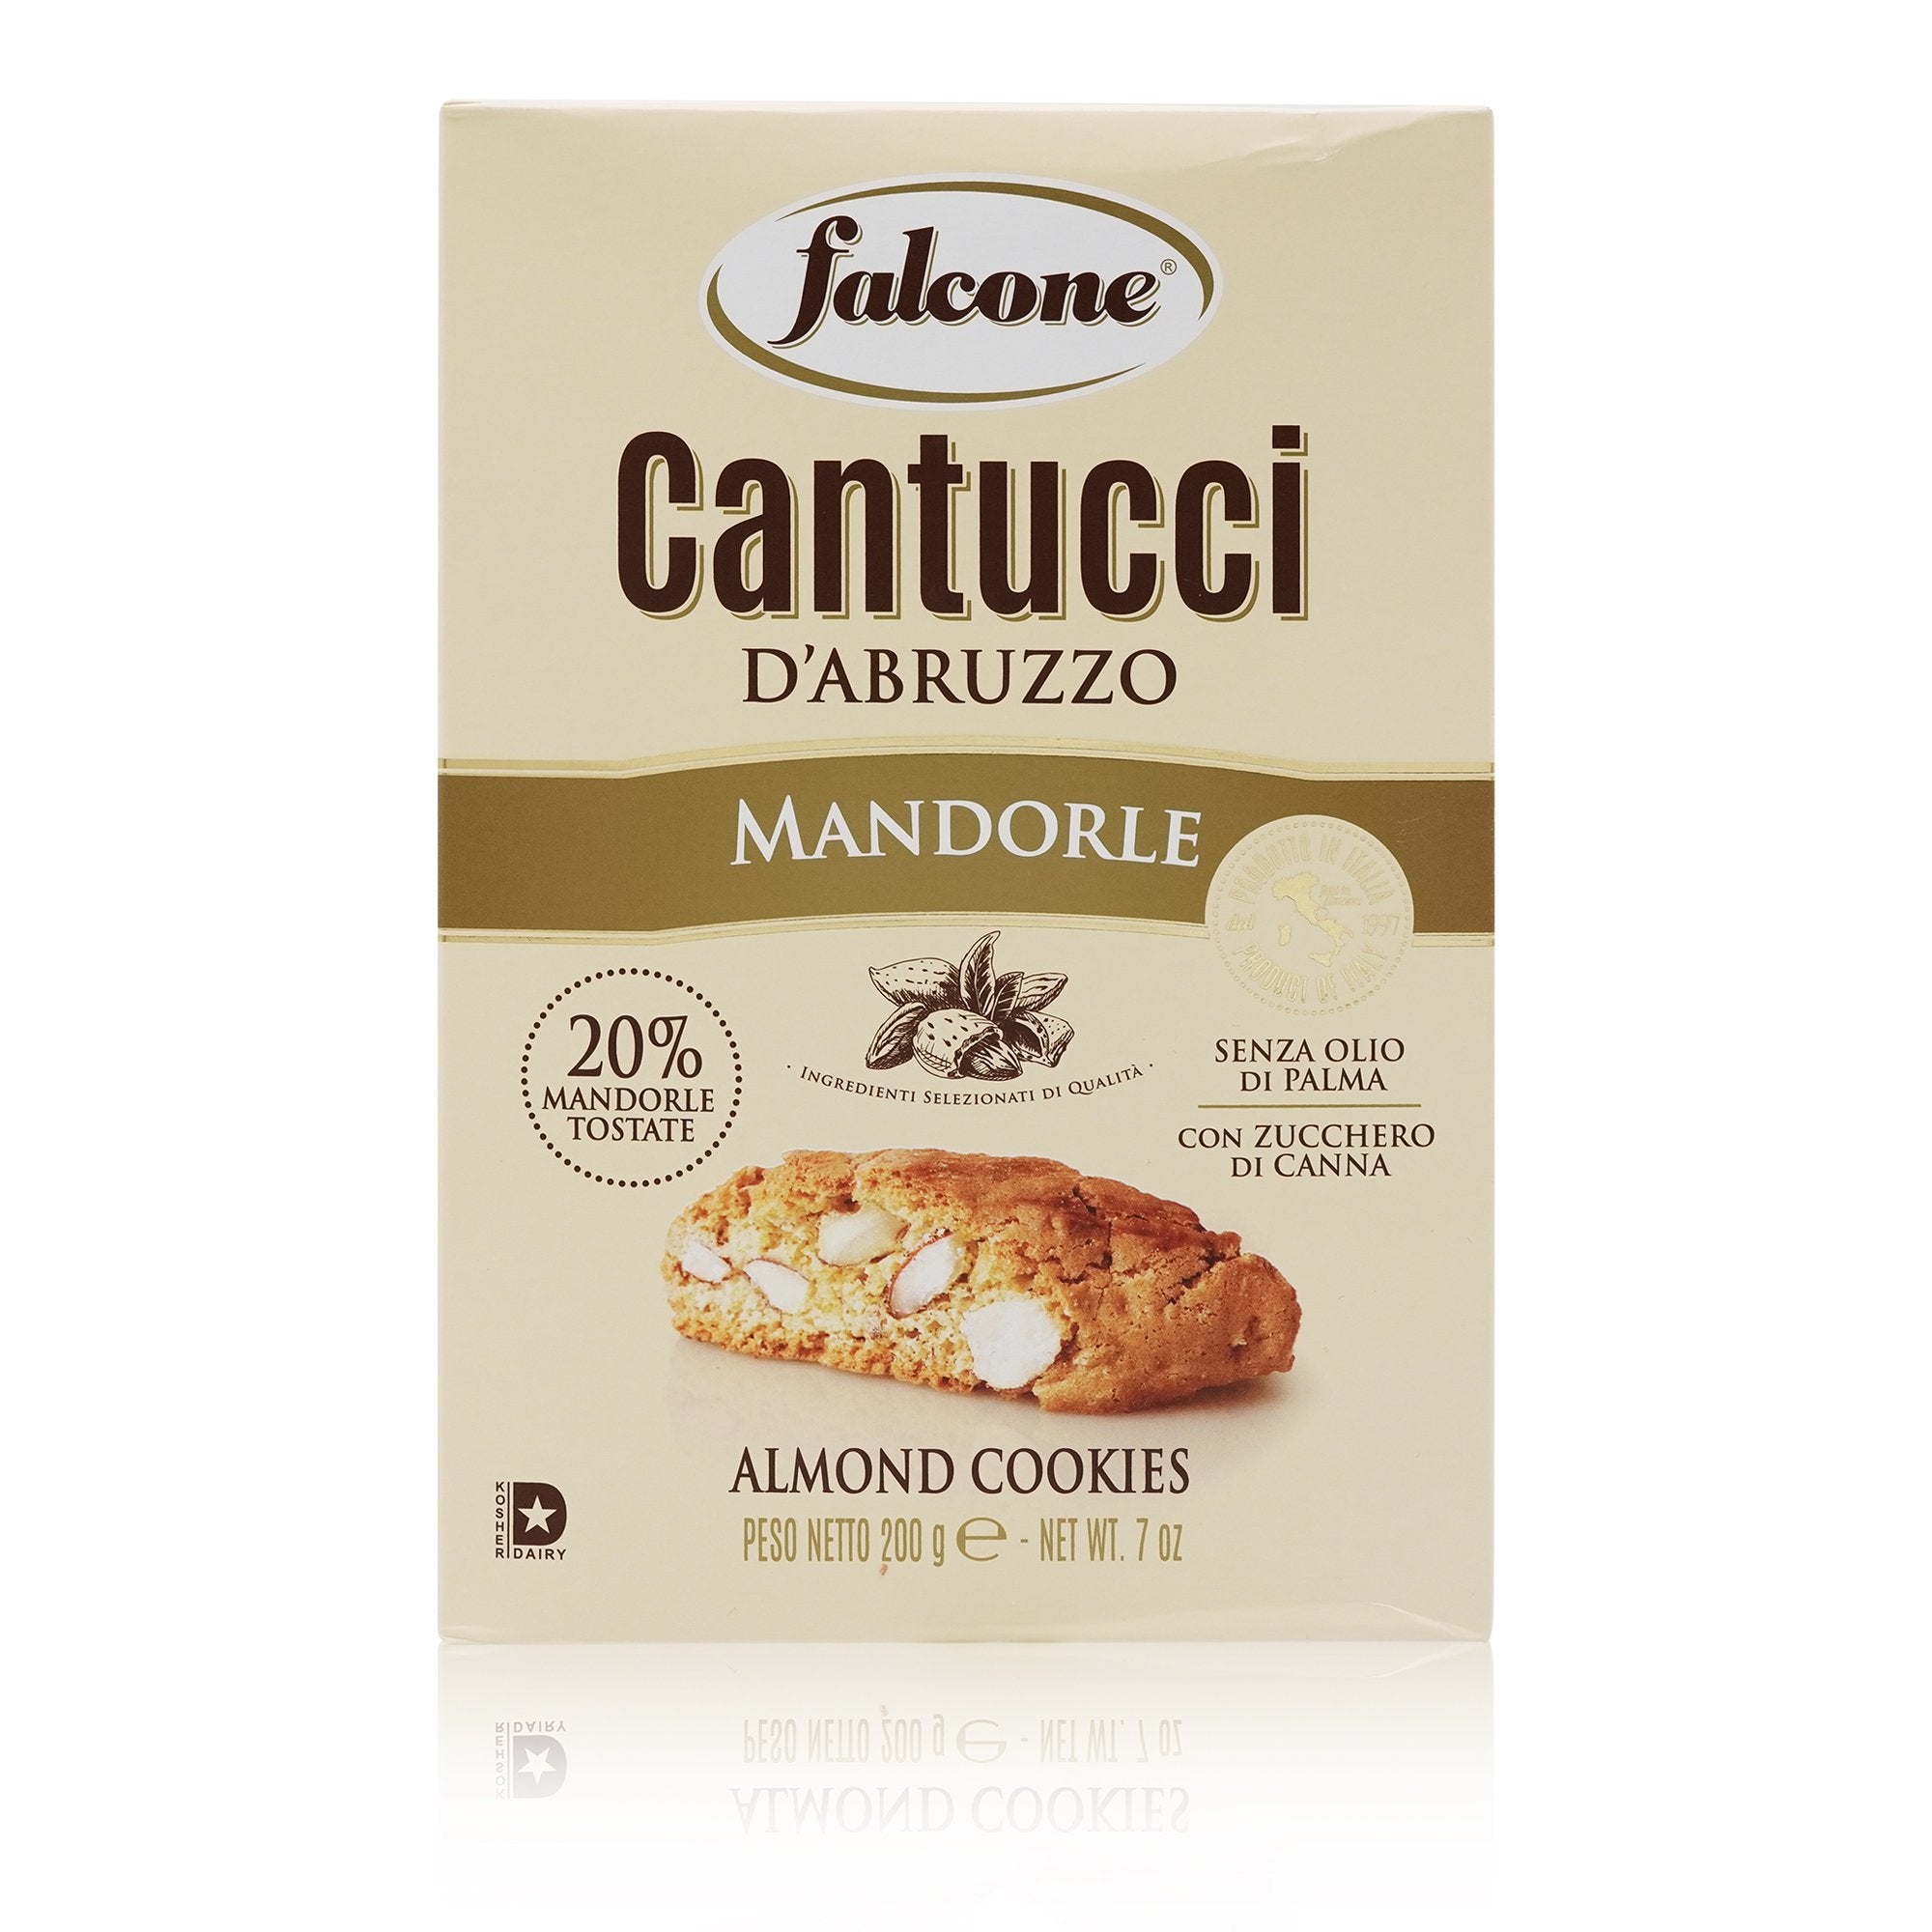 FALCONE Cantucci alla mandorla – Cantucci mit Mandeln - 0,180kg - italienisch - einkaufen.de